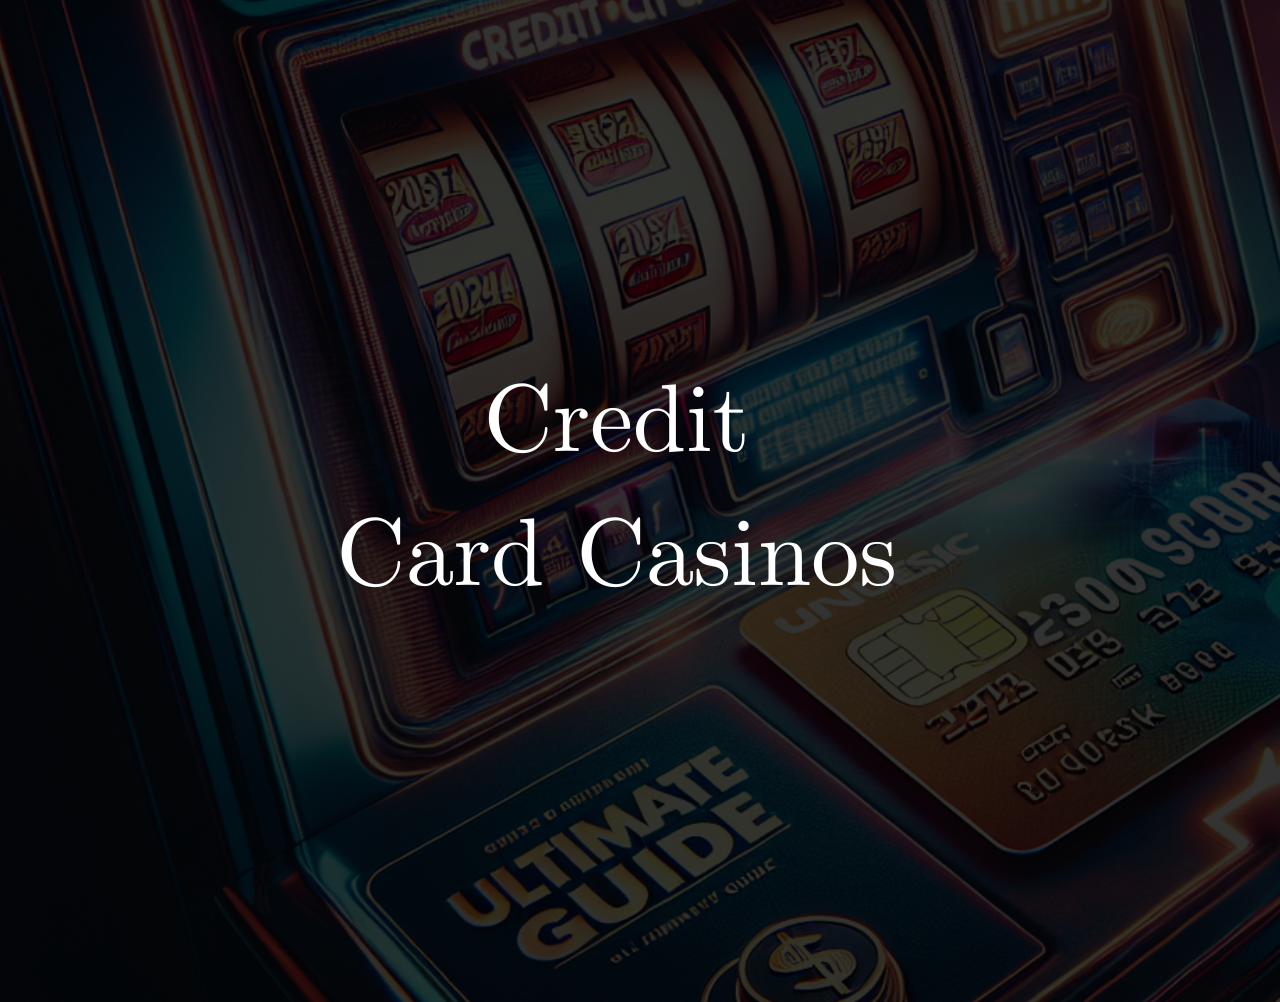 Credit Card Casinos Not On Gamstop